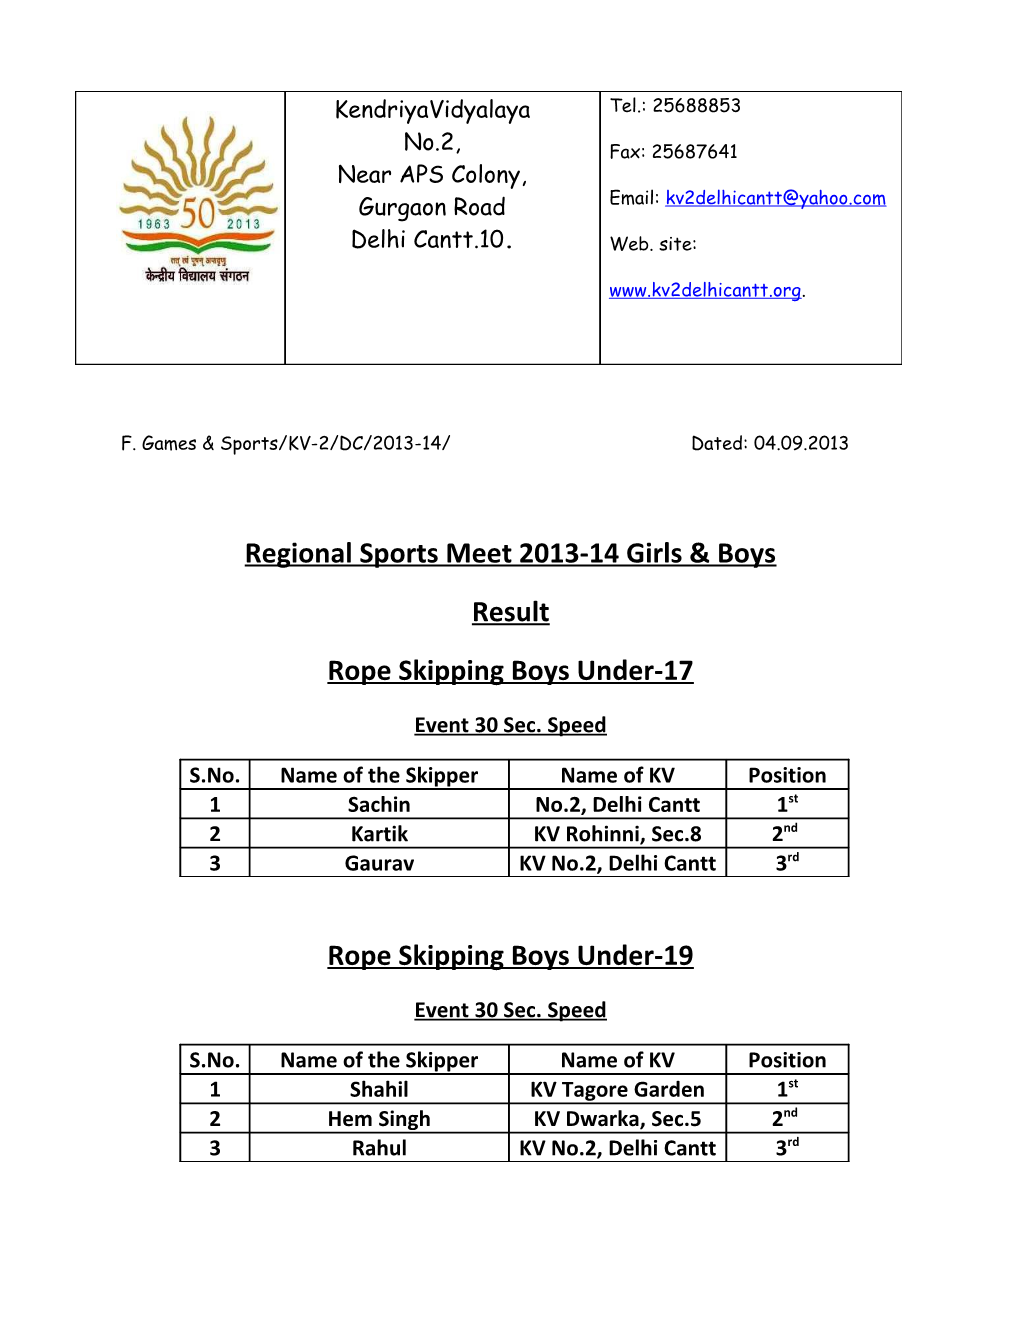 Regional Sports Meet 2013-14 Girls & Boys